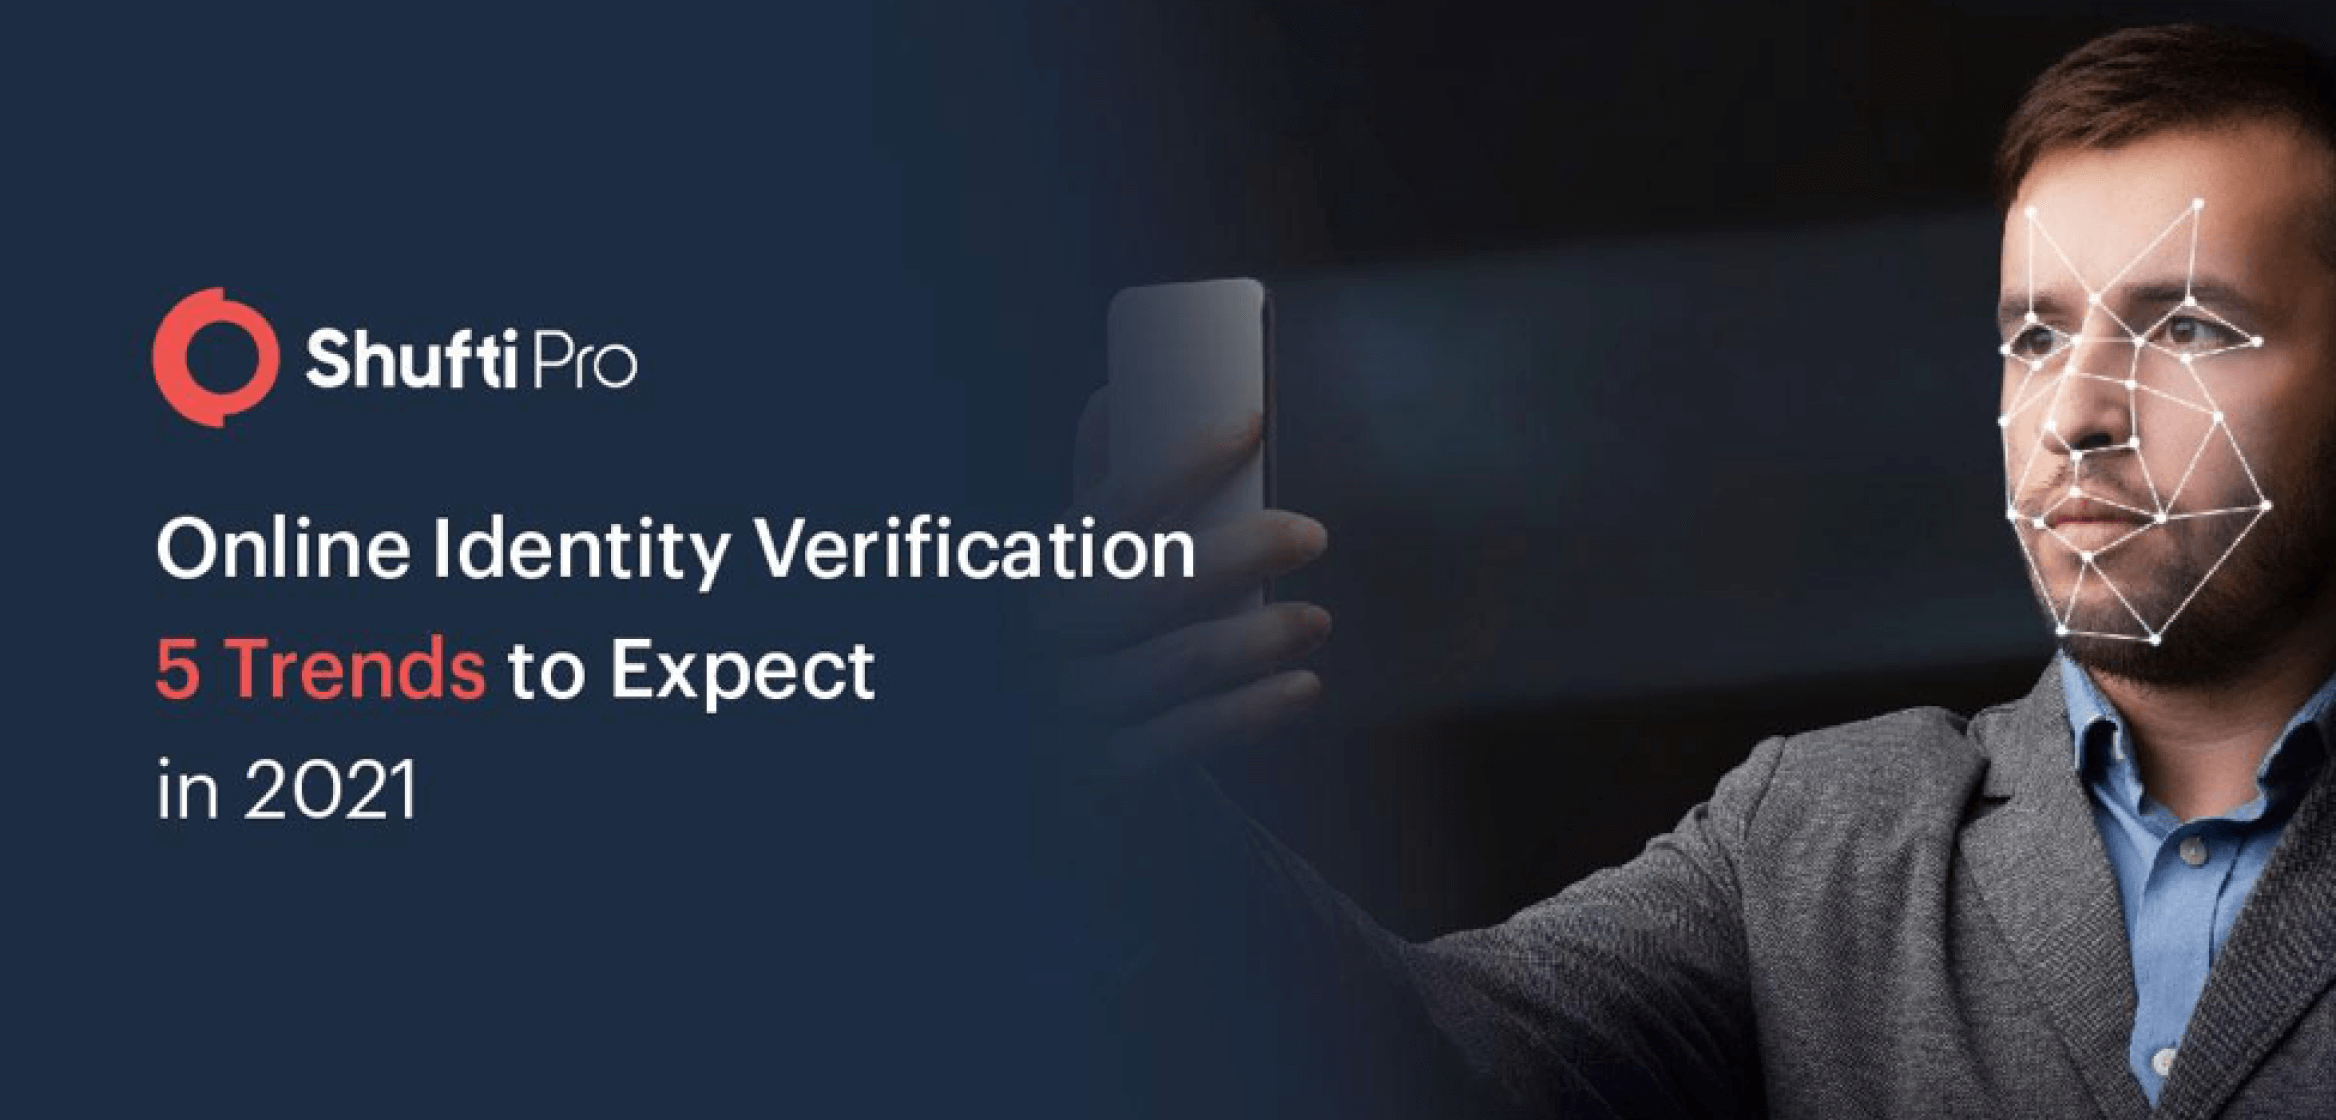 Online identity verification